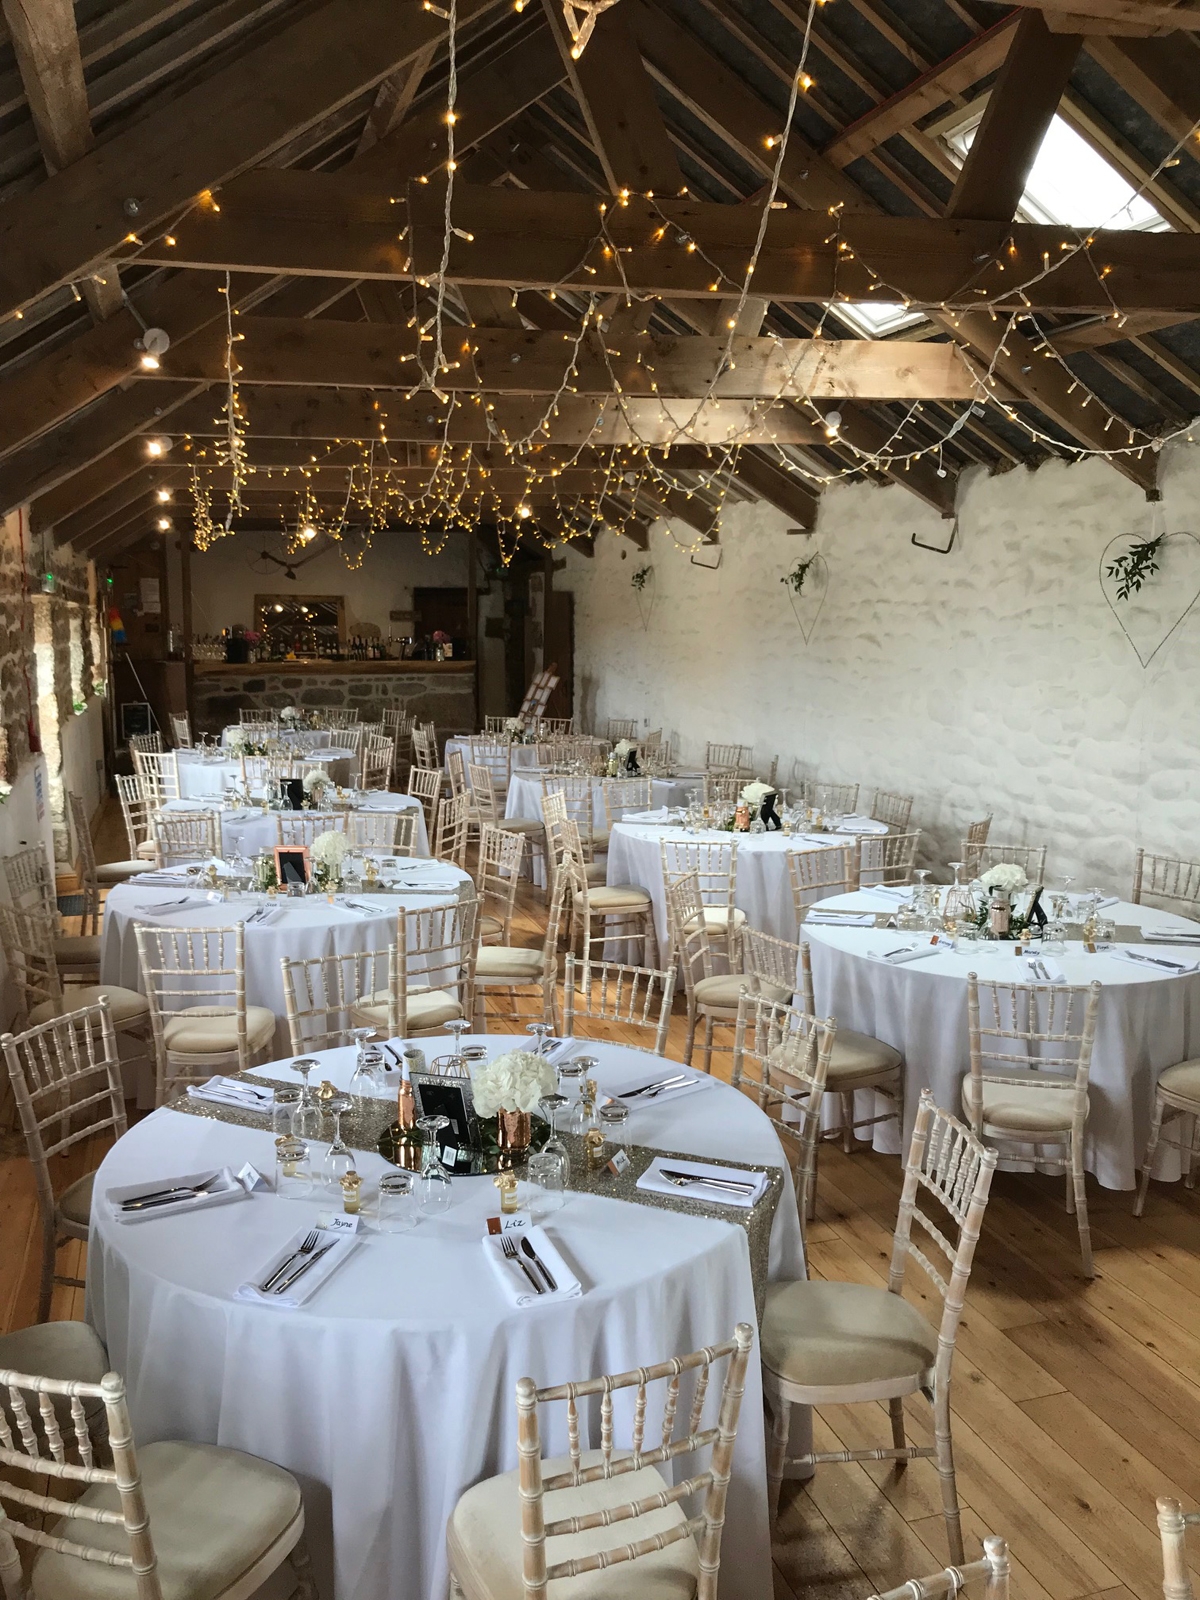 A coast-meets-country wedding dream at Chypraze Wedding Barn